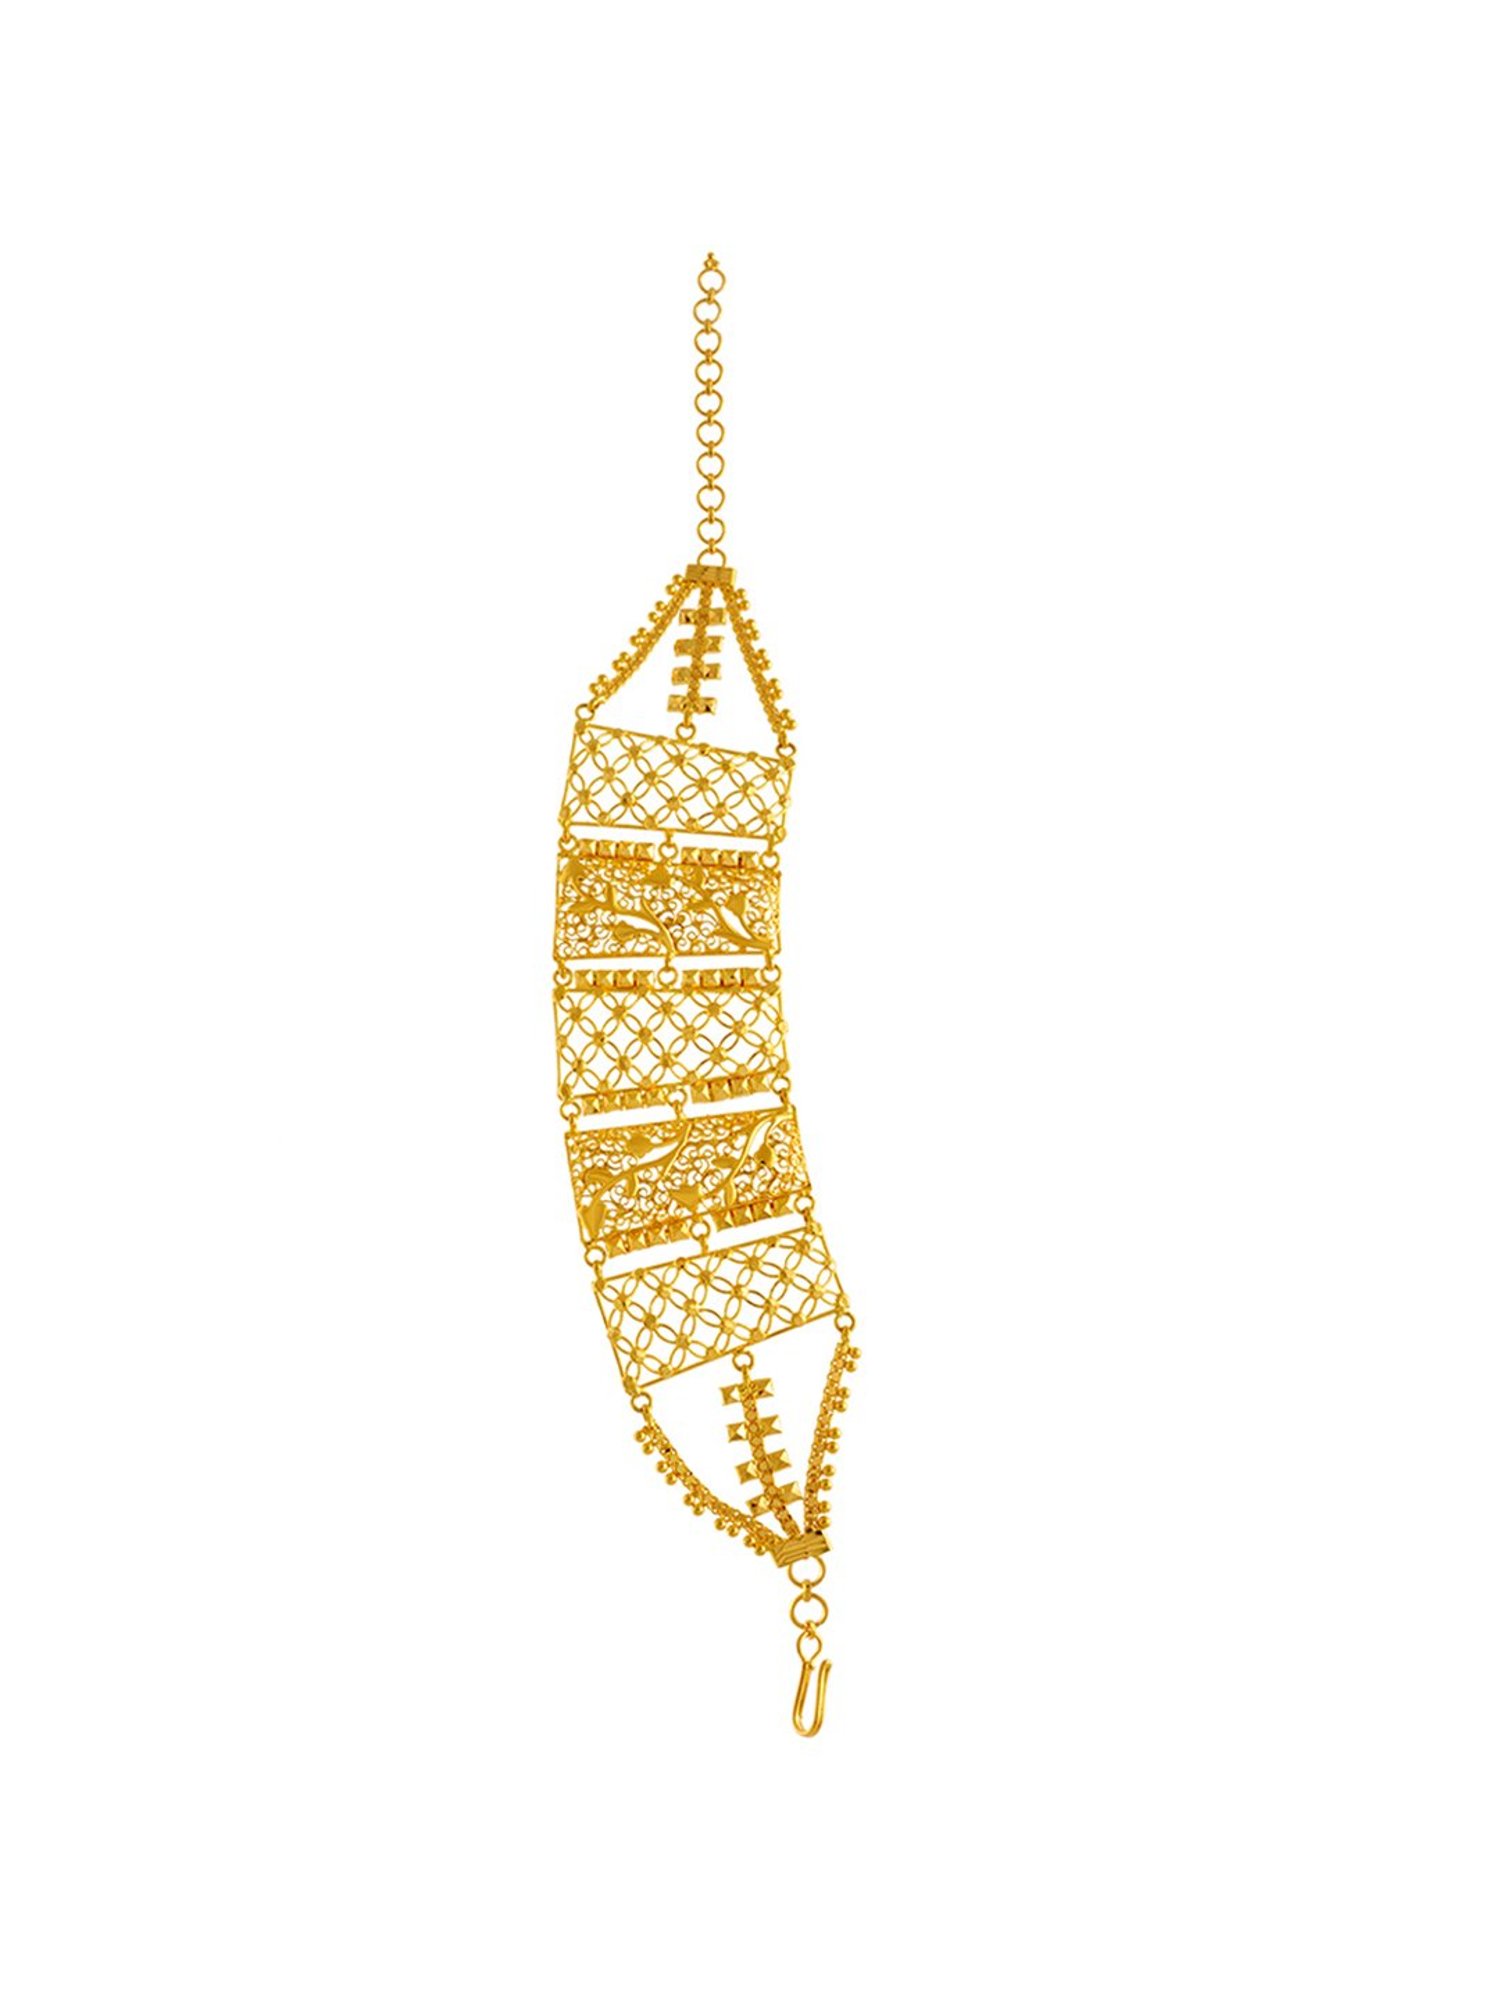 P.C. Chandra Jewellers 22KT (916) Yellow Gold BIS Hallmark Traditional Hand  Fan Style in American Diamond Bracelet for Women - 3.5 Grams : Amazon.in:  Fashion